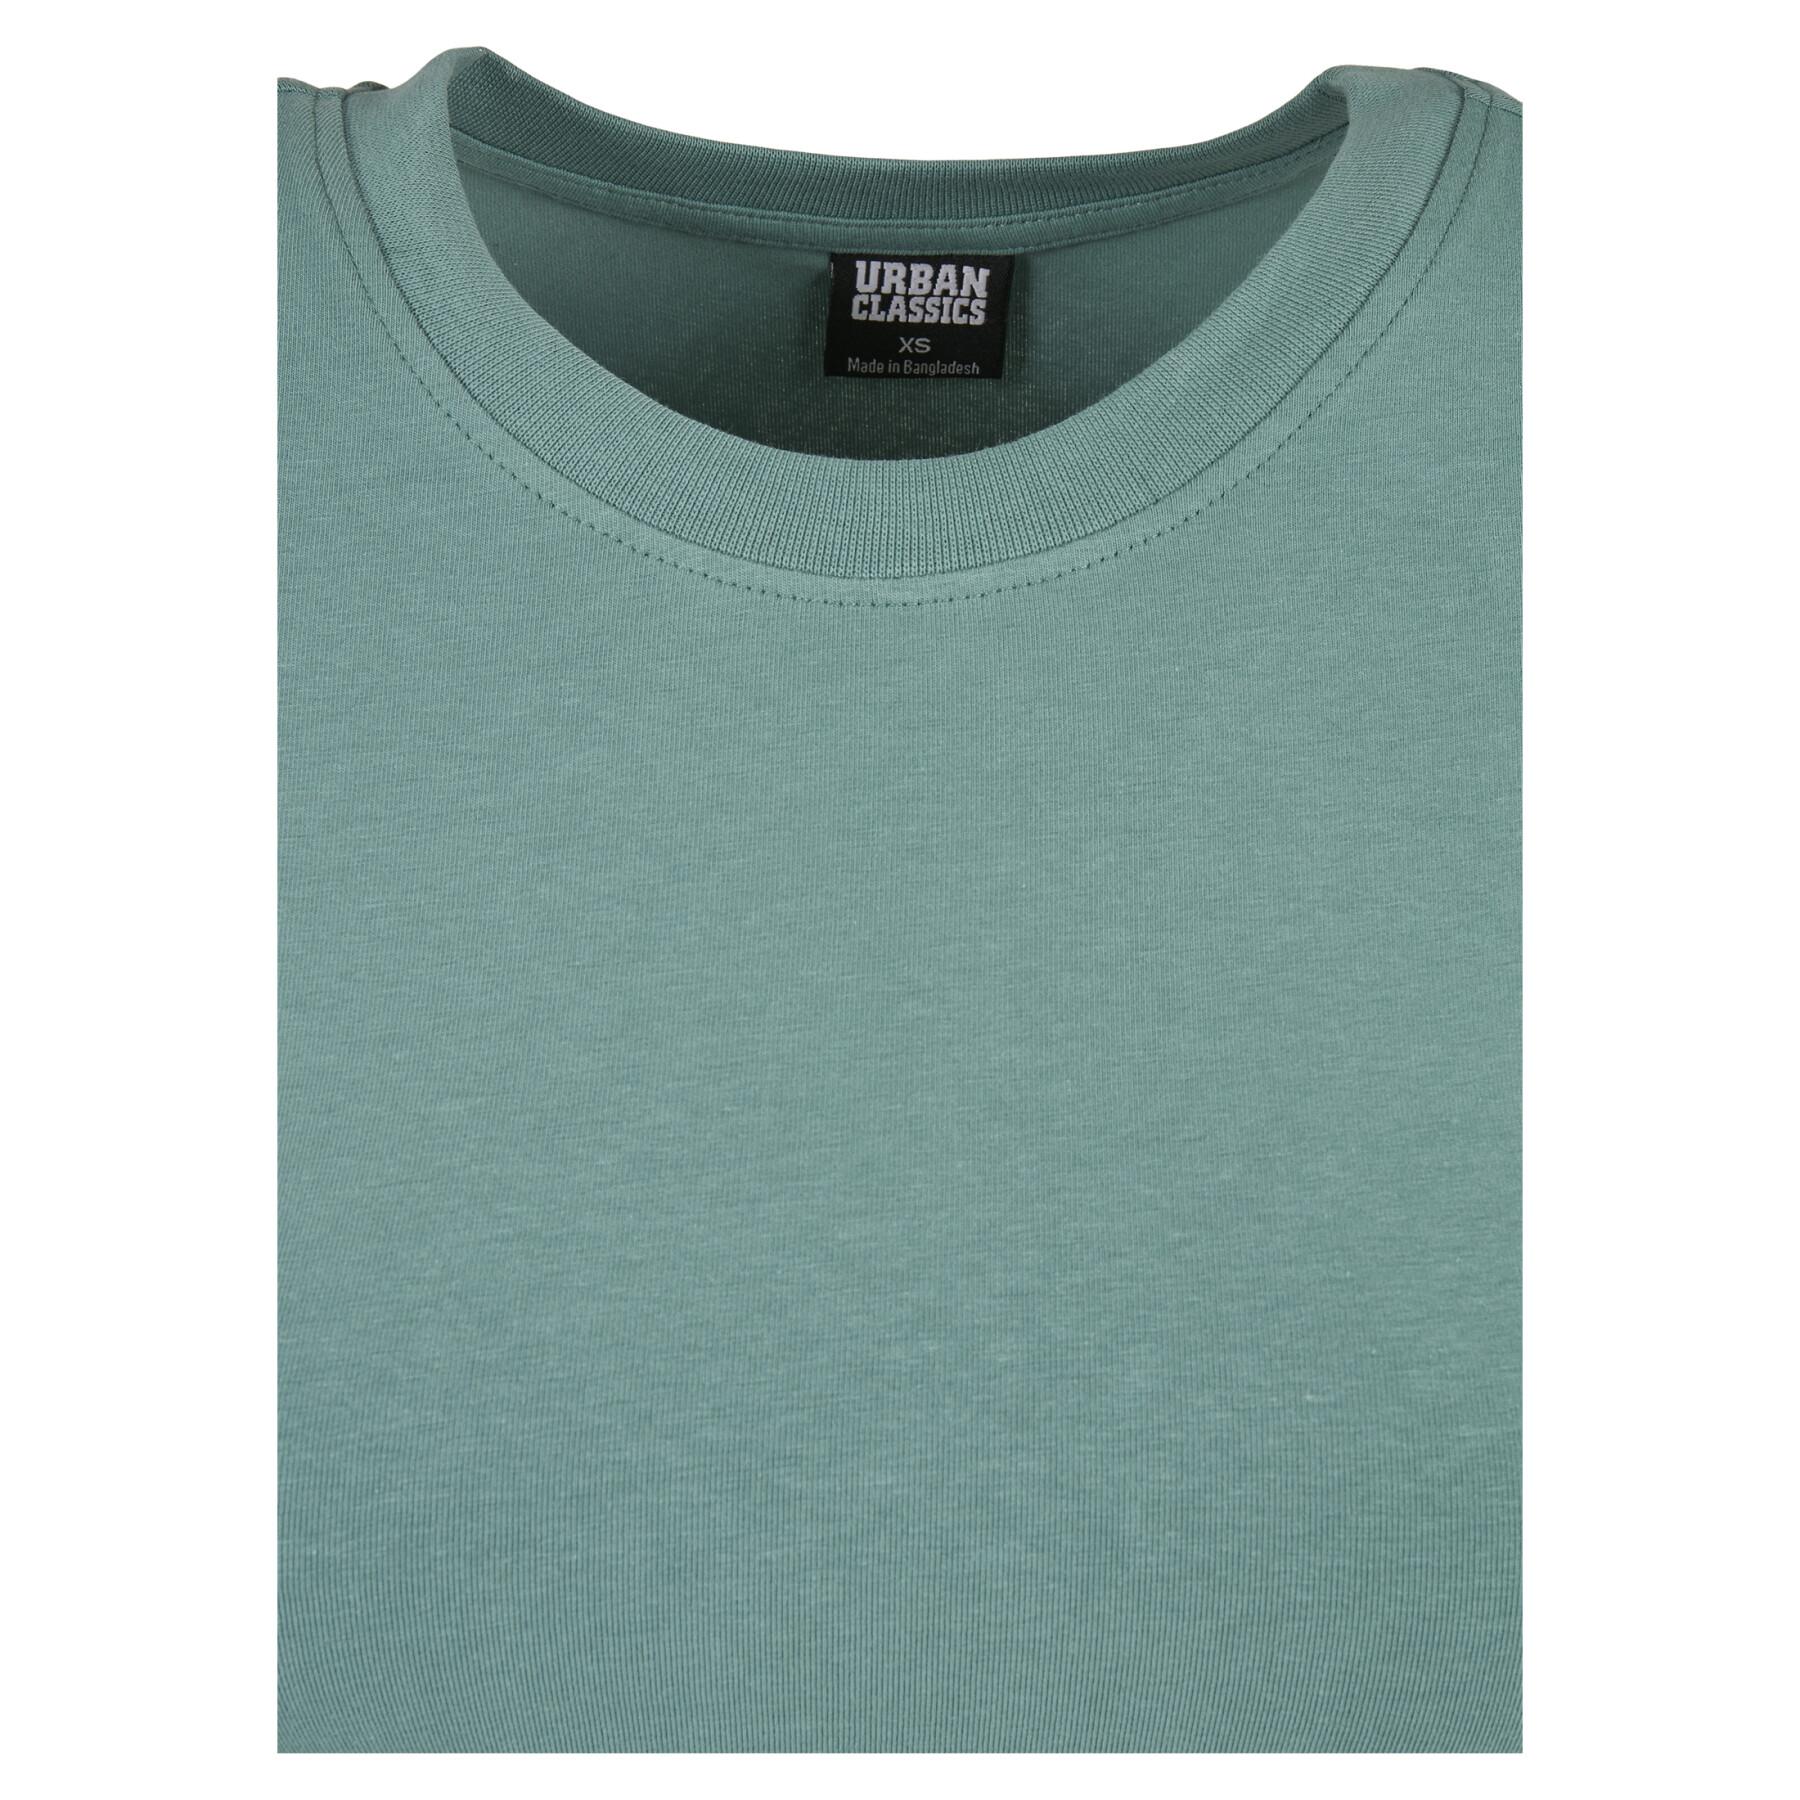 Camiseta mujer Urban Classics stretch cropped (tamaños grandes)